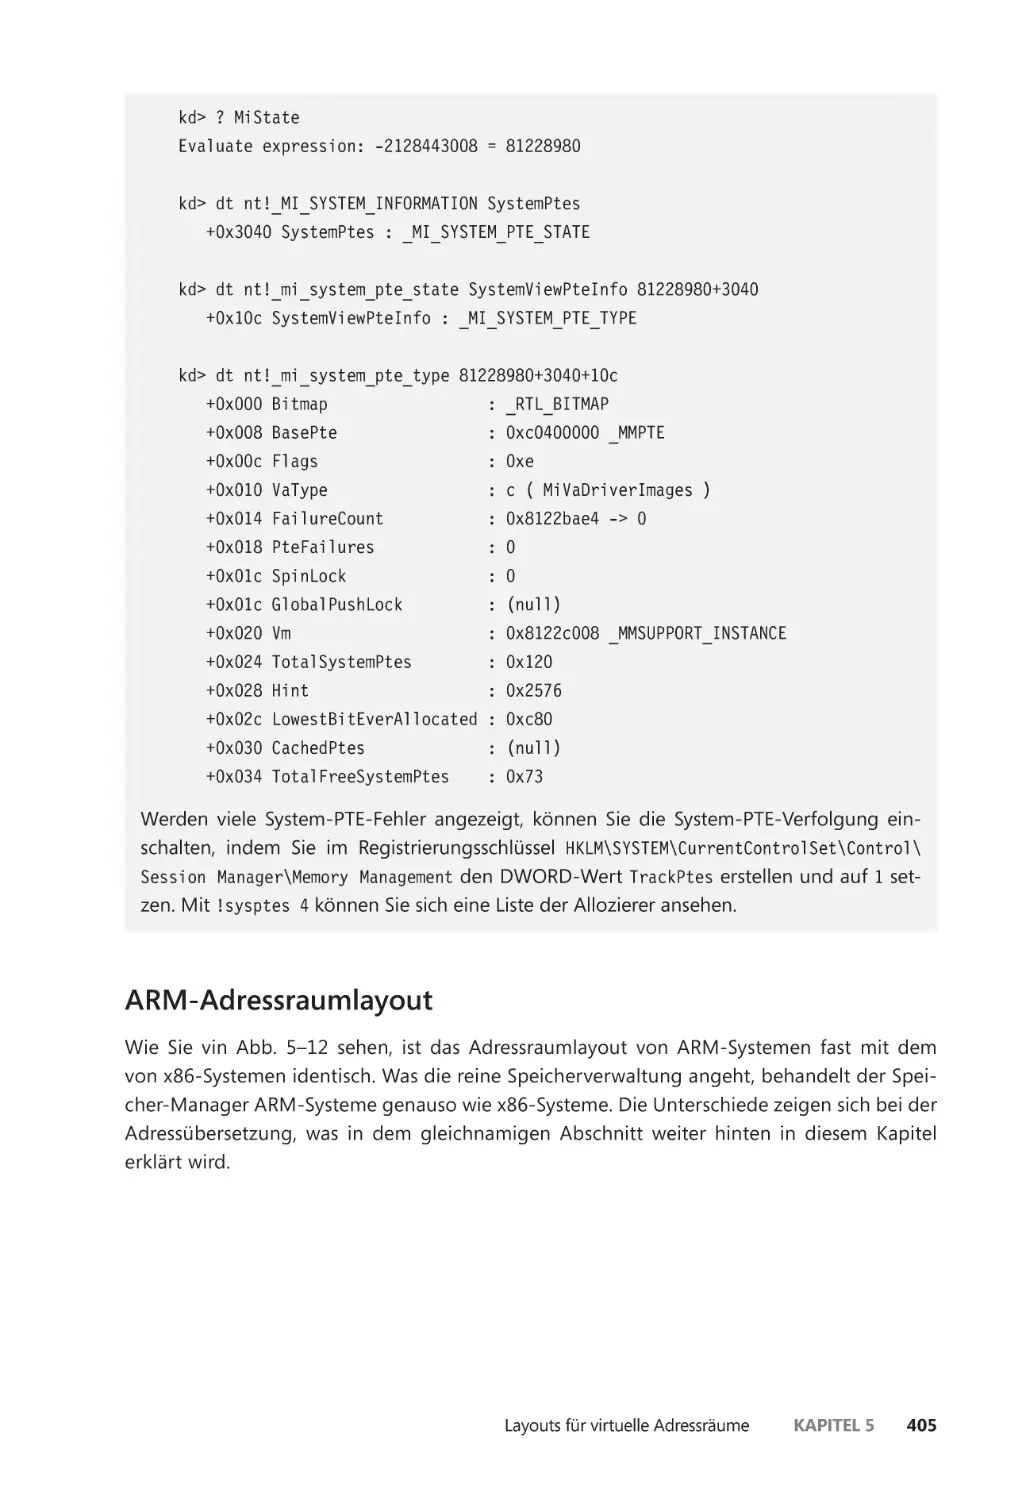 ARM-Adressraumlayout